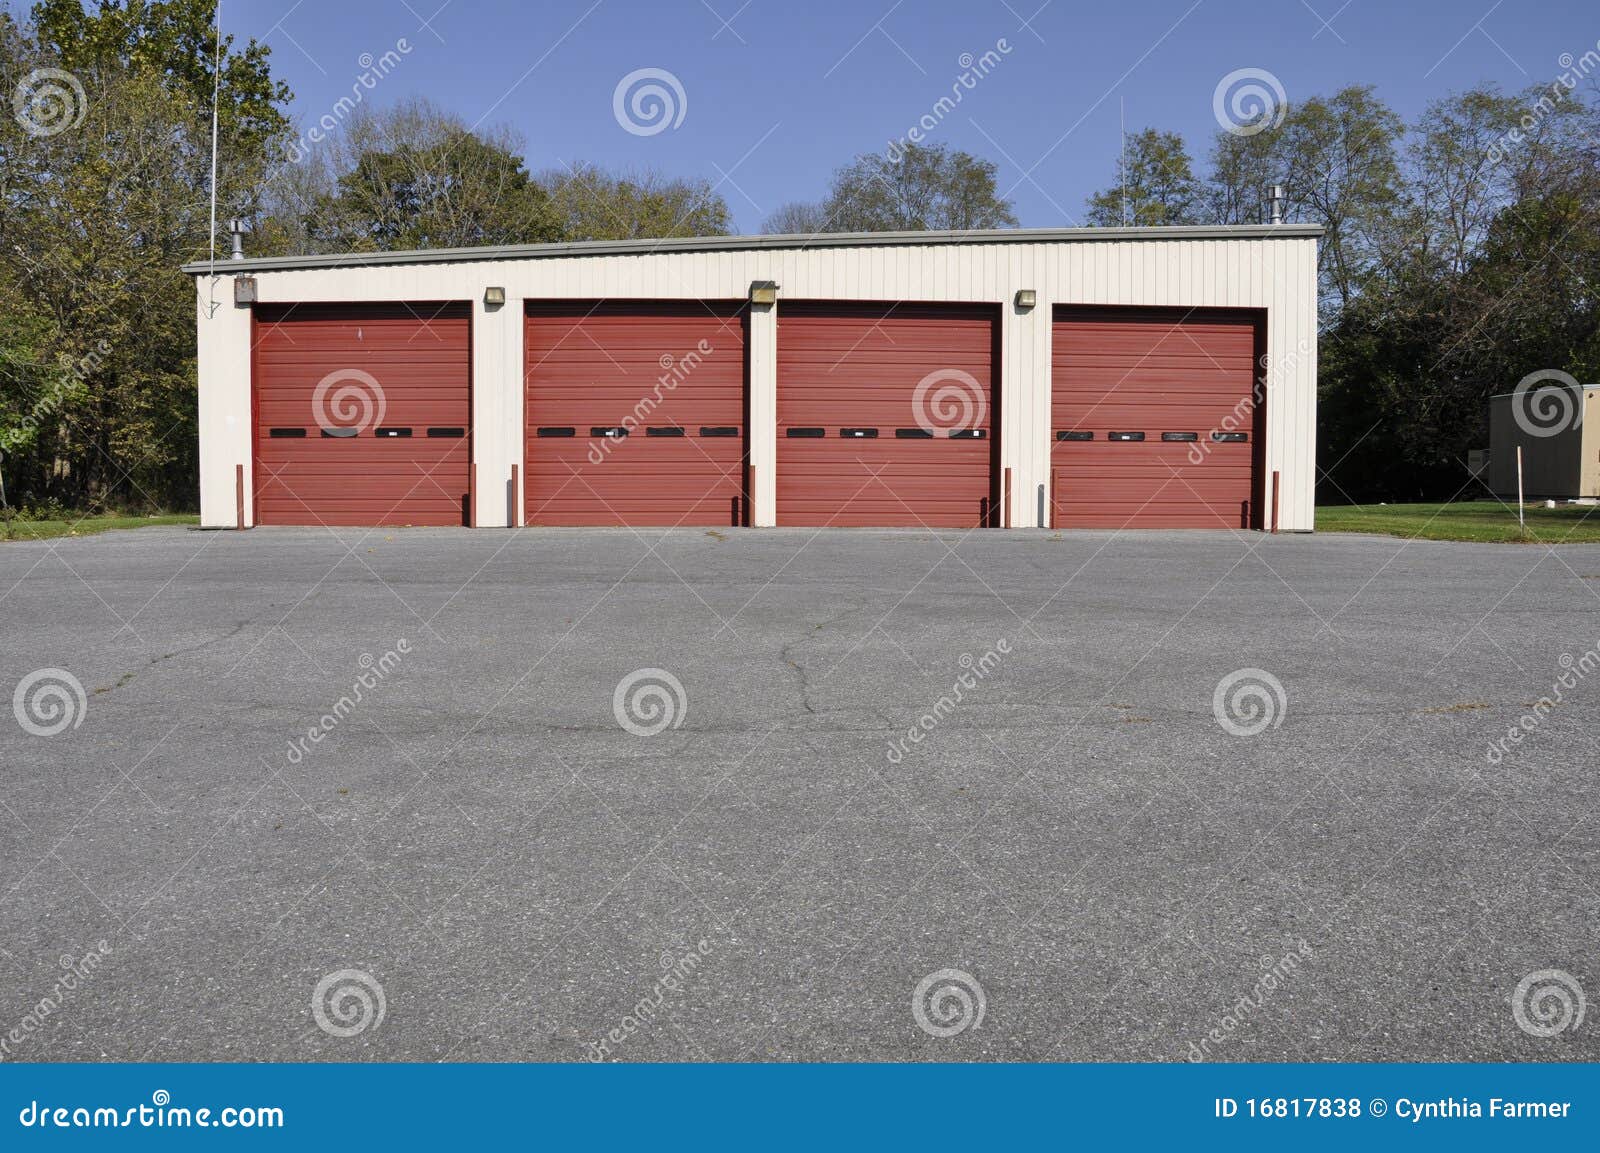 rural firehouse garage